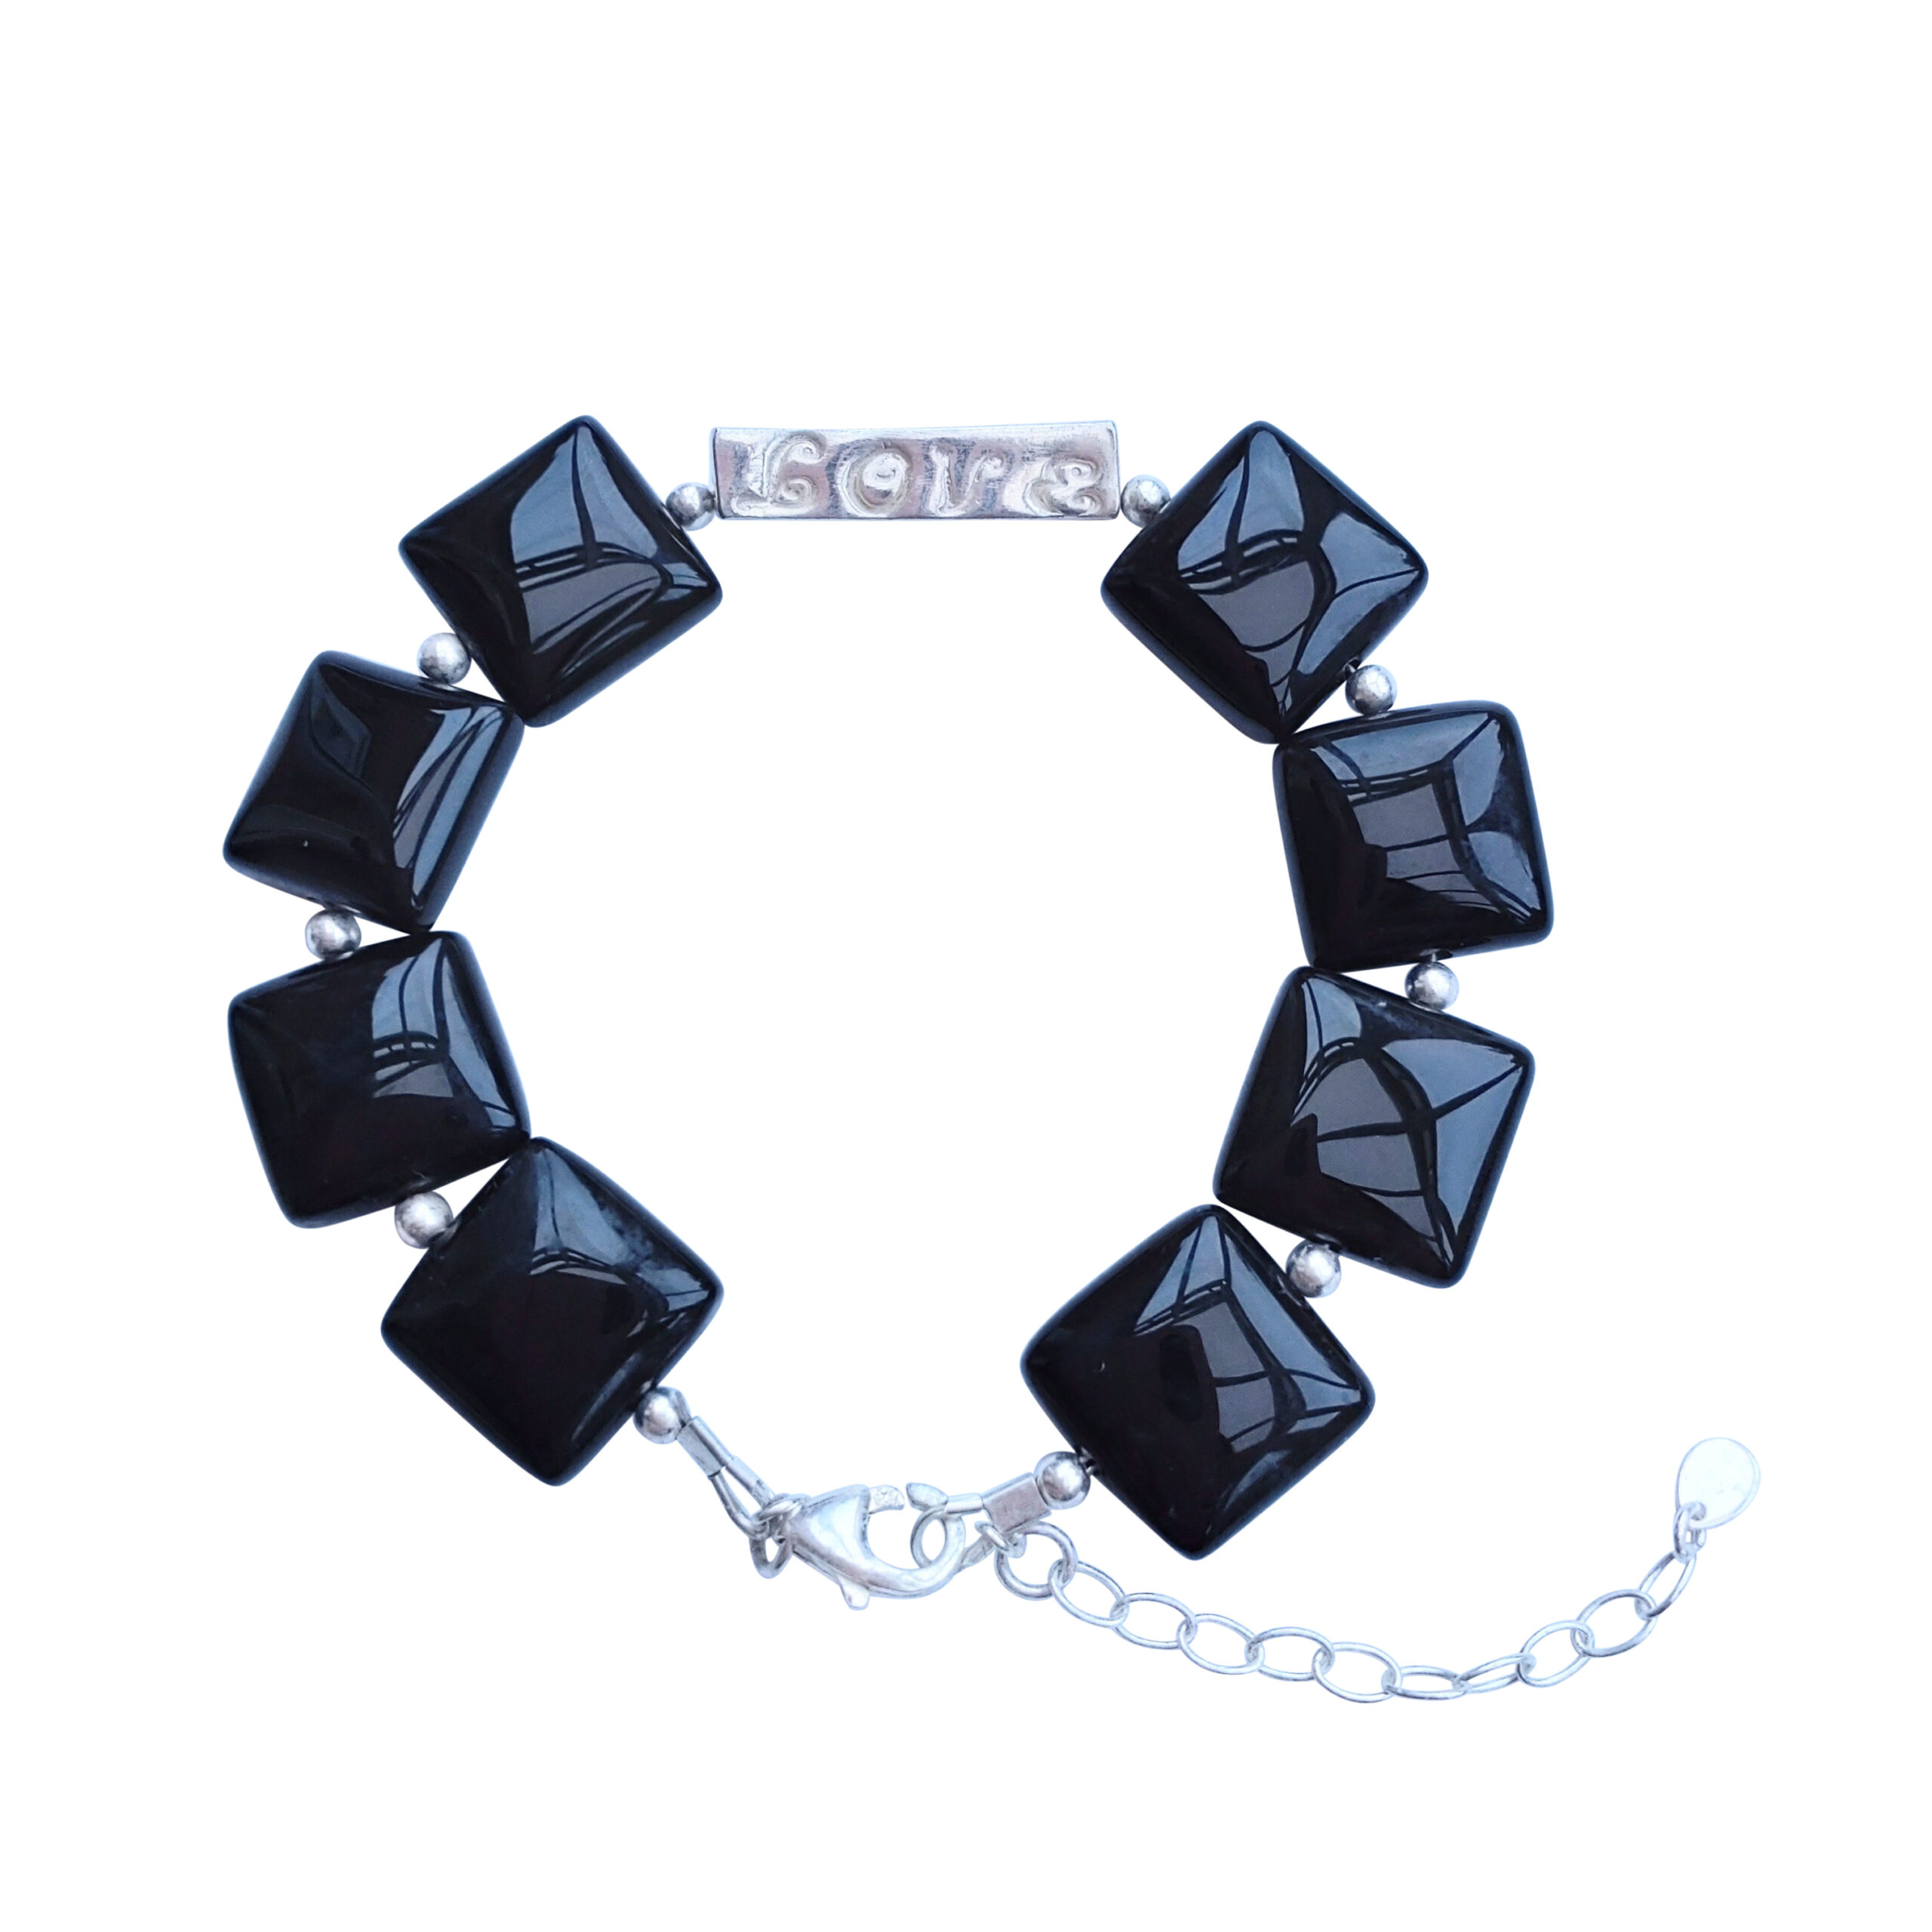 Handmade Bracelet with Onyx Gemstones and Silver Handstamped Love wording handmade fever